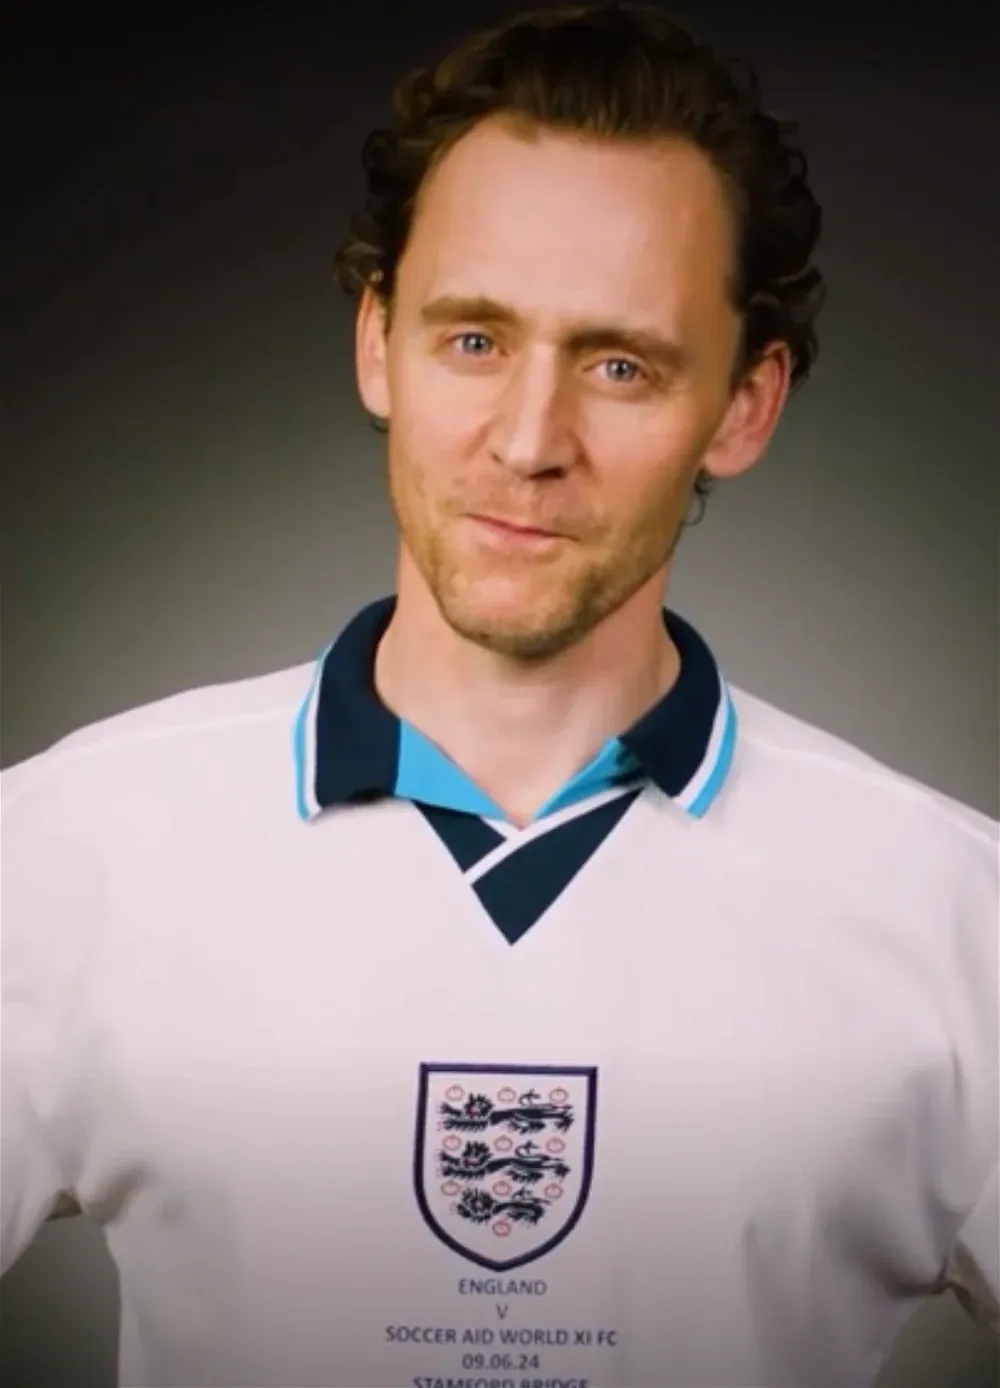 Avatar of Soccer! Tom Hiddleston